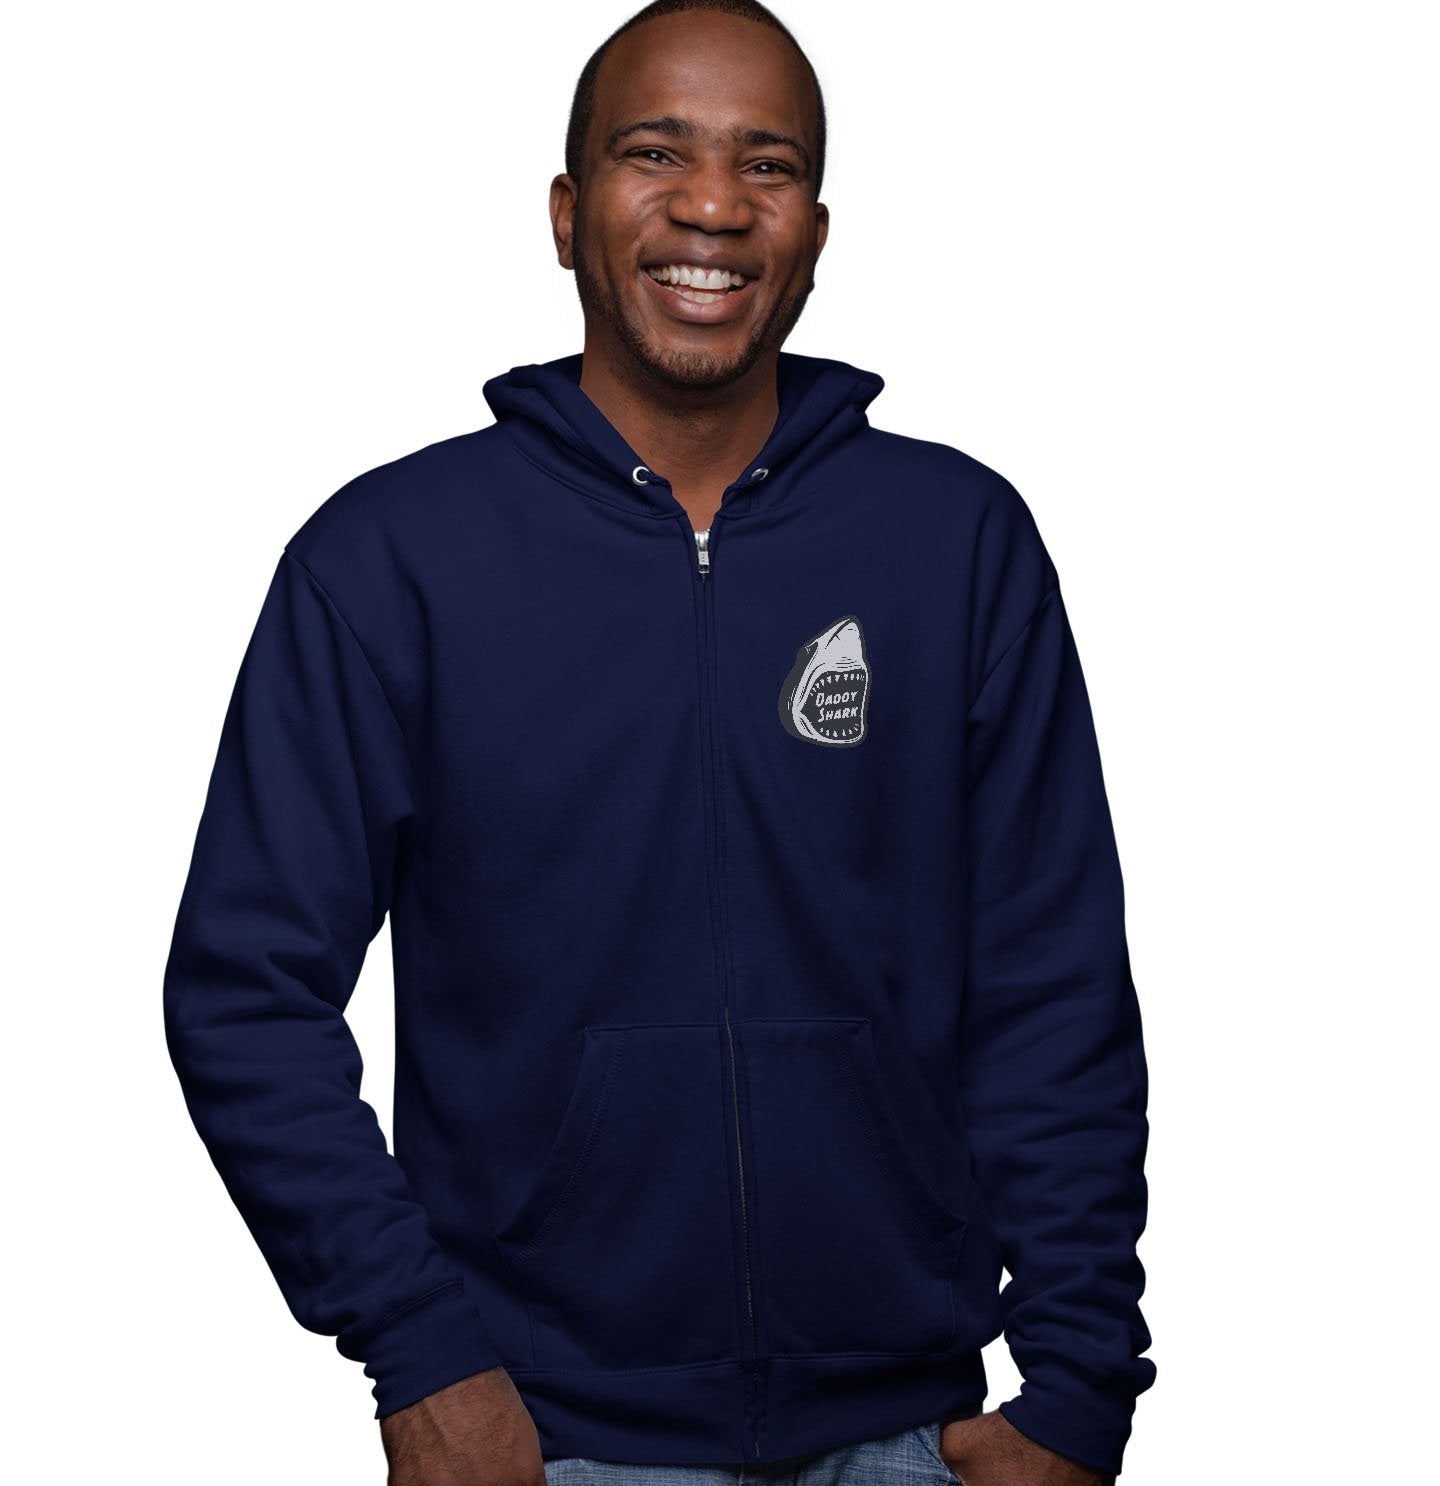 Daddy Shark - Adult Unisex Full-Zip Hoodie Sweatshirt